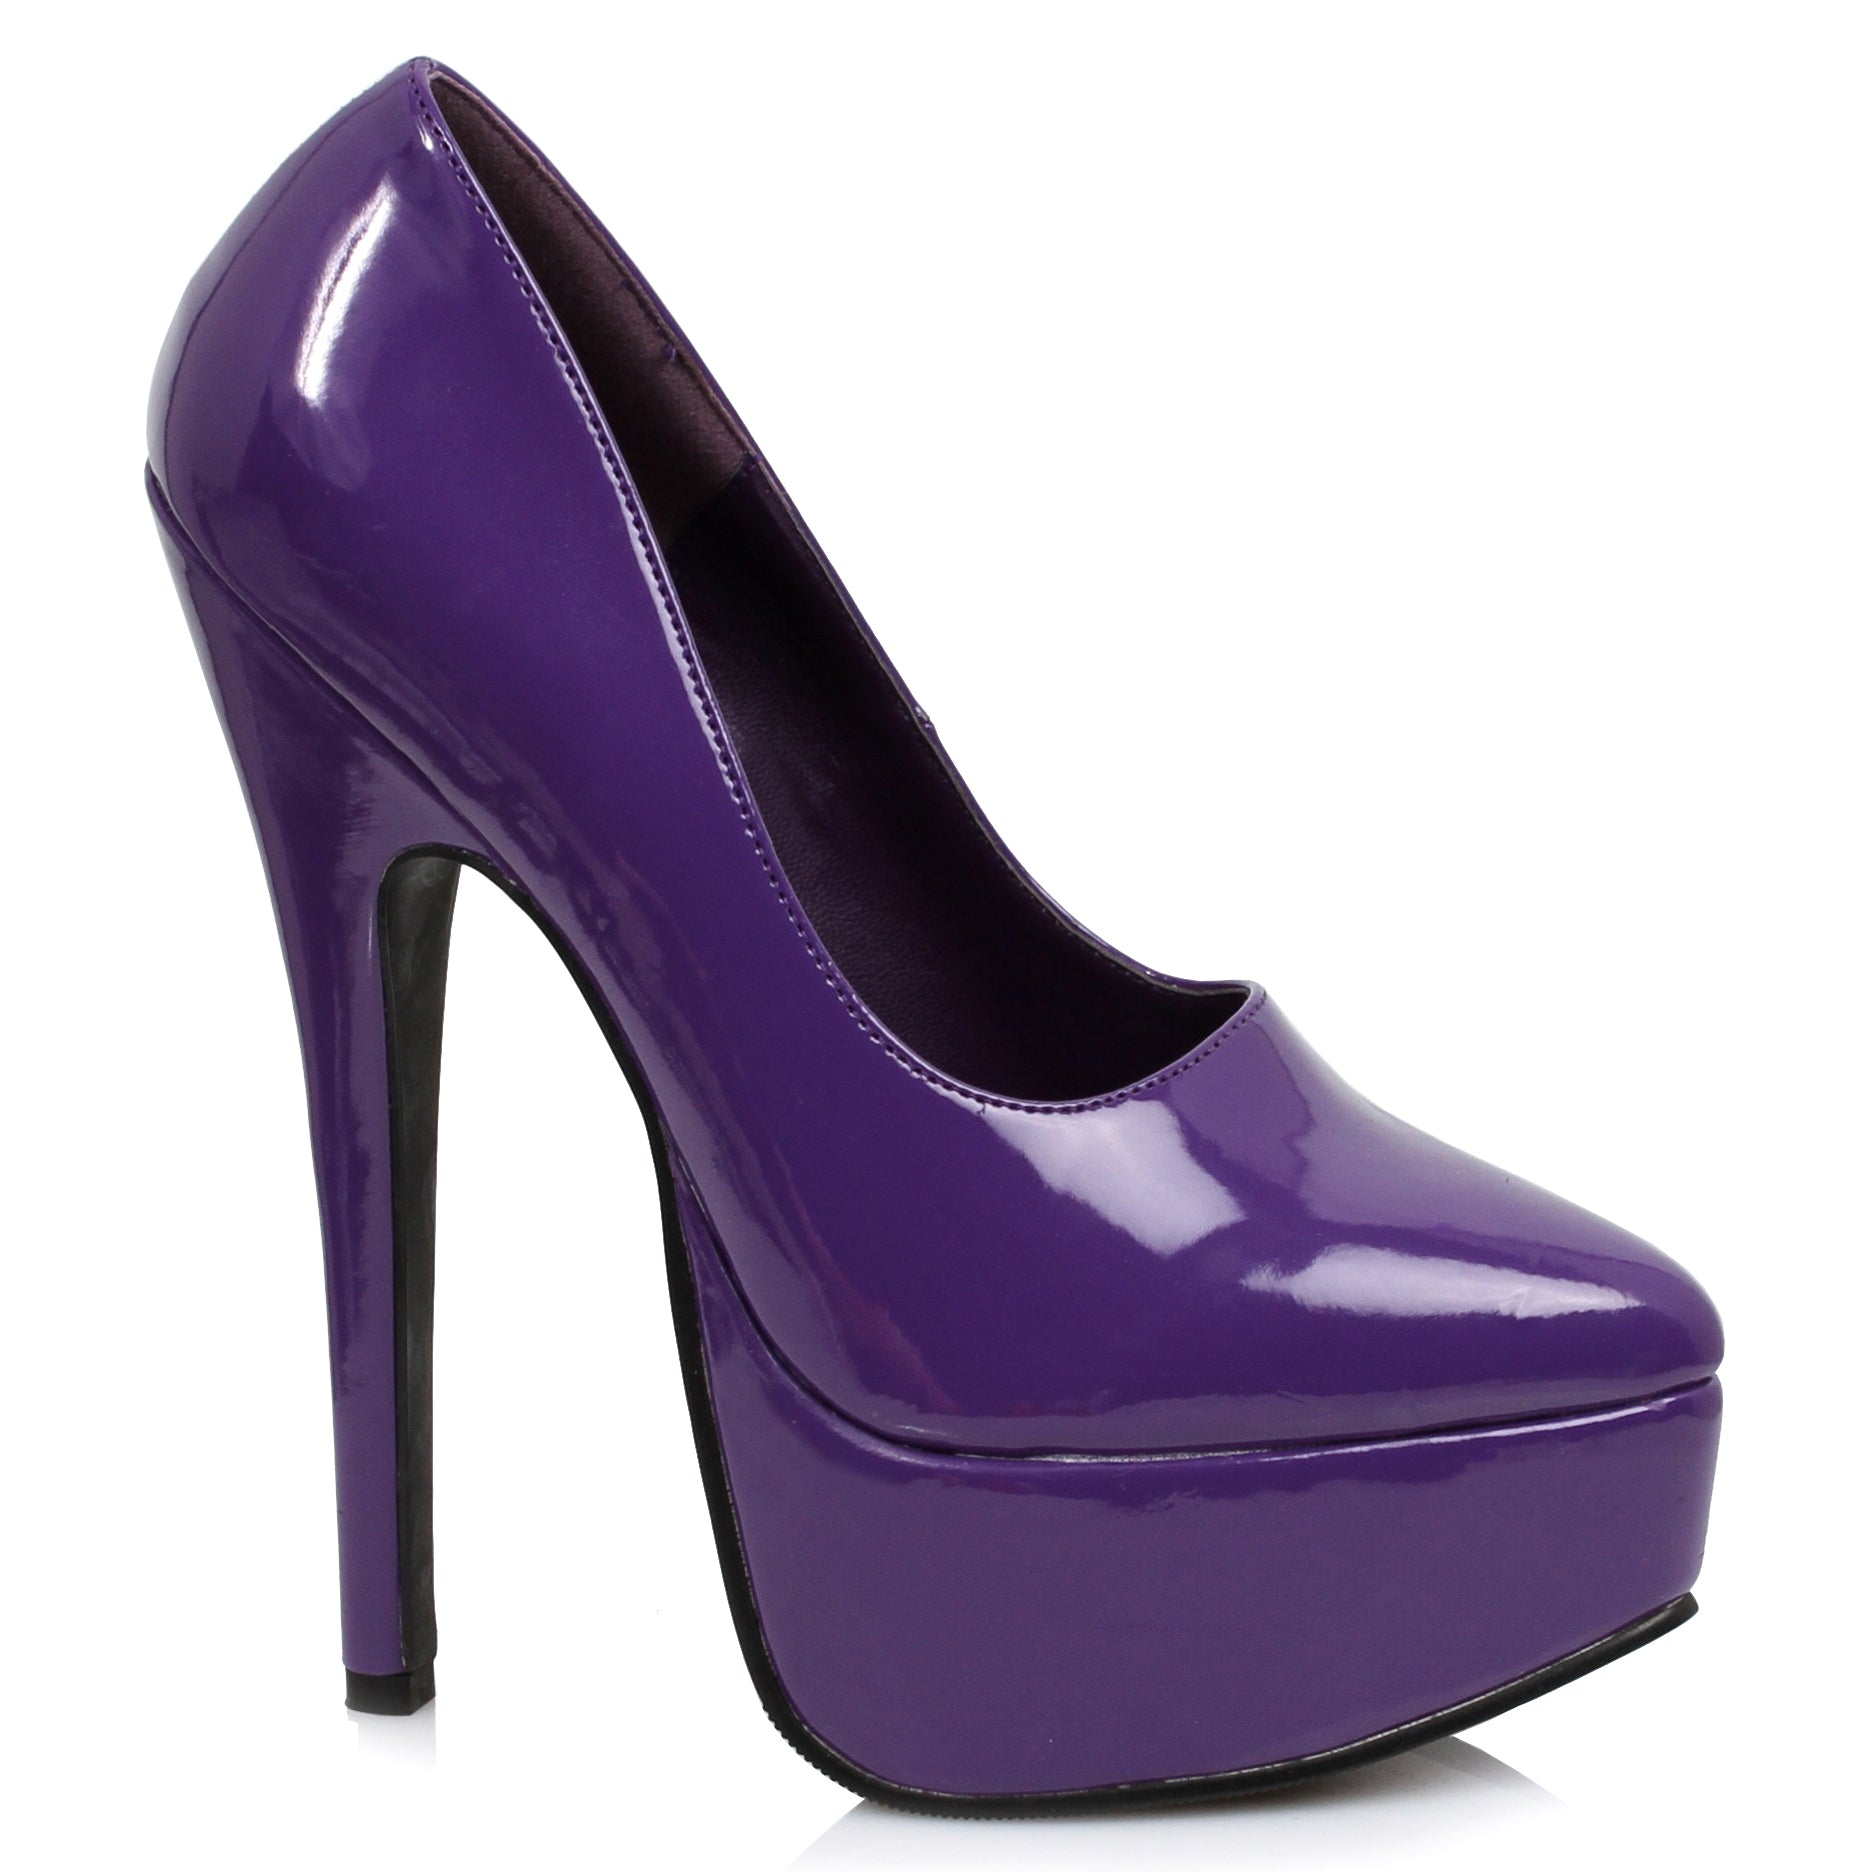 652-PRINCE Ellie Shoes 6.5" Stiletto Heel Pump. EXTENDED S 6 INCH HEEL PUMPS